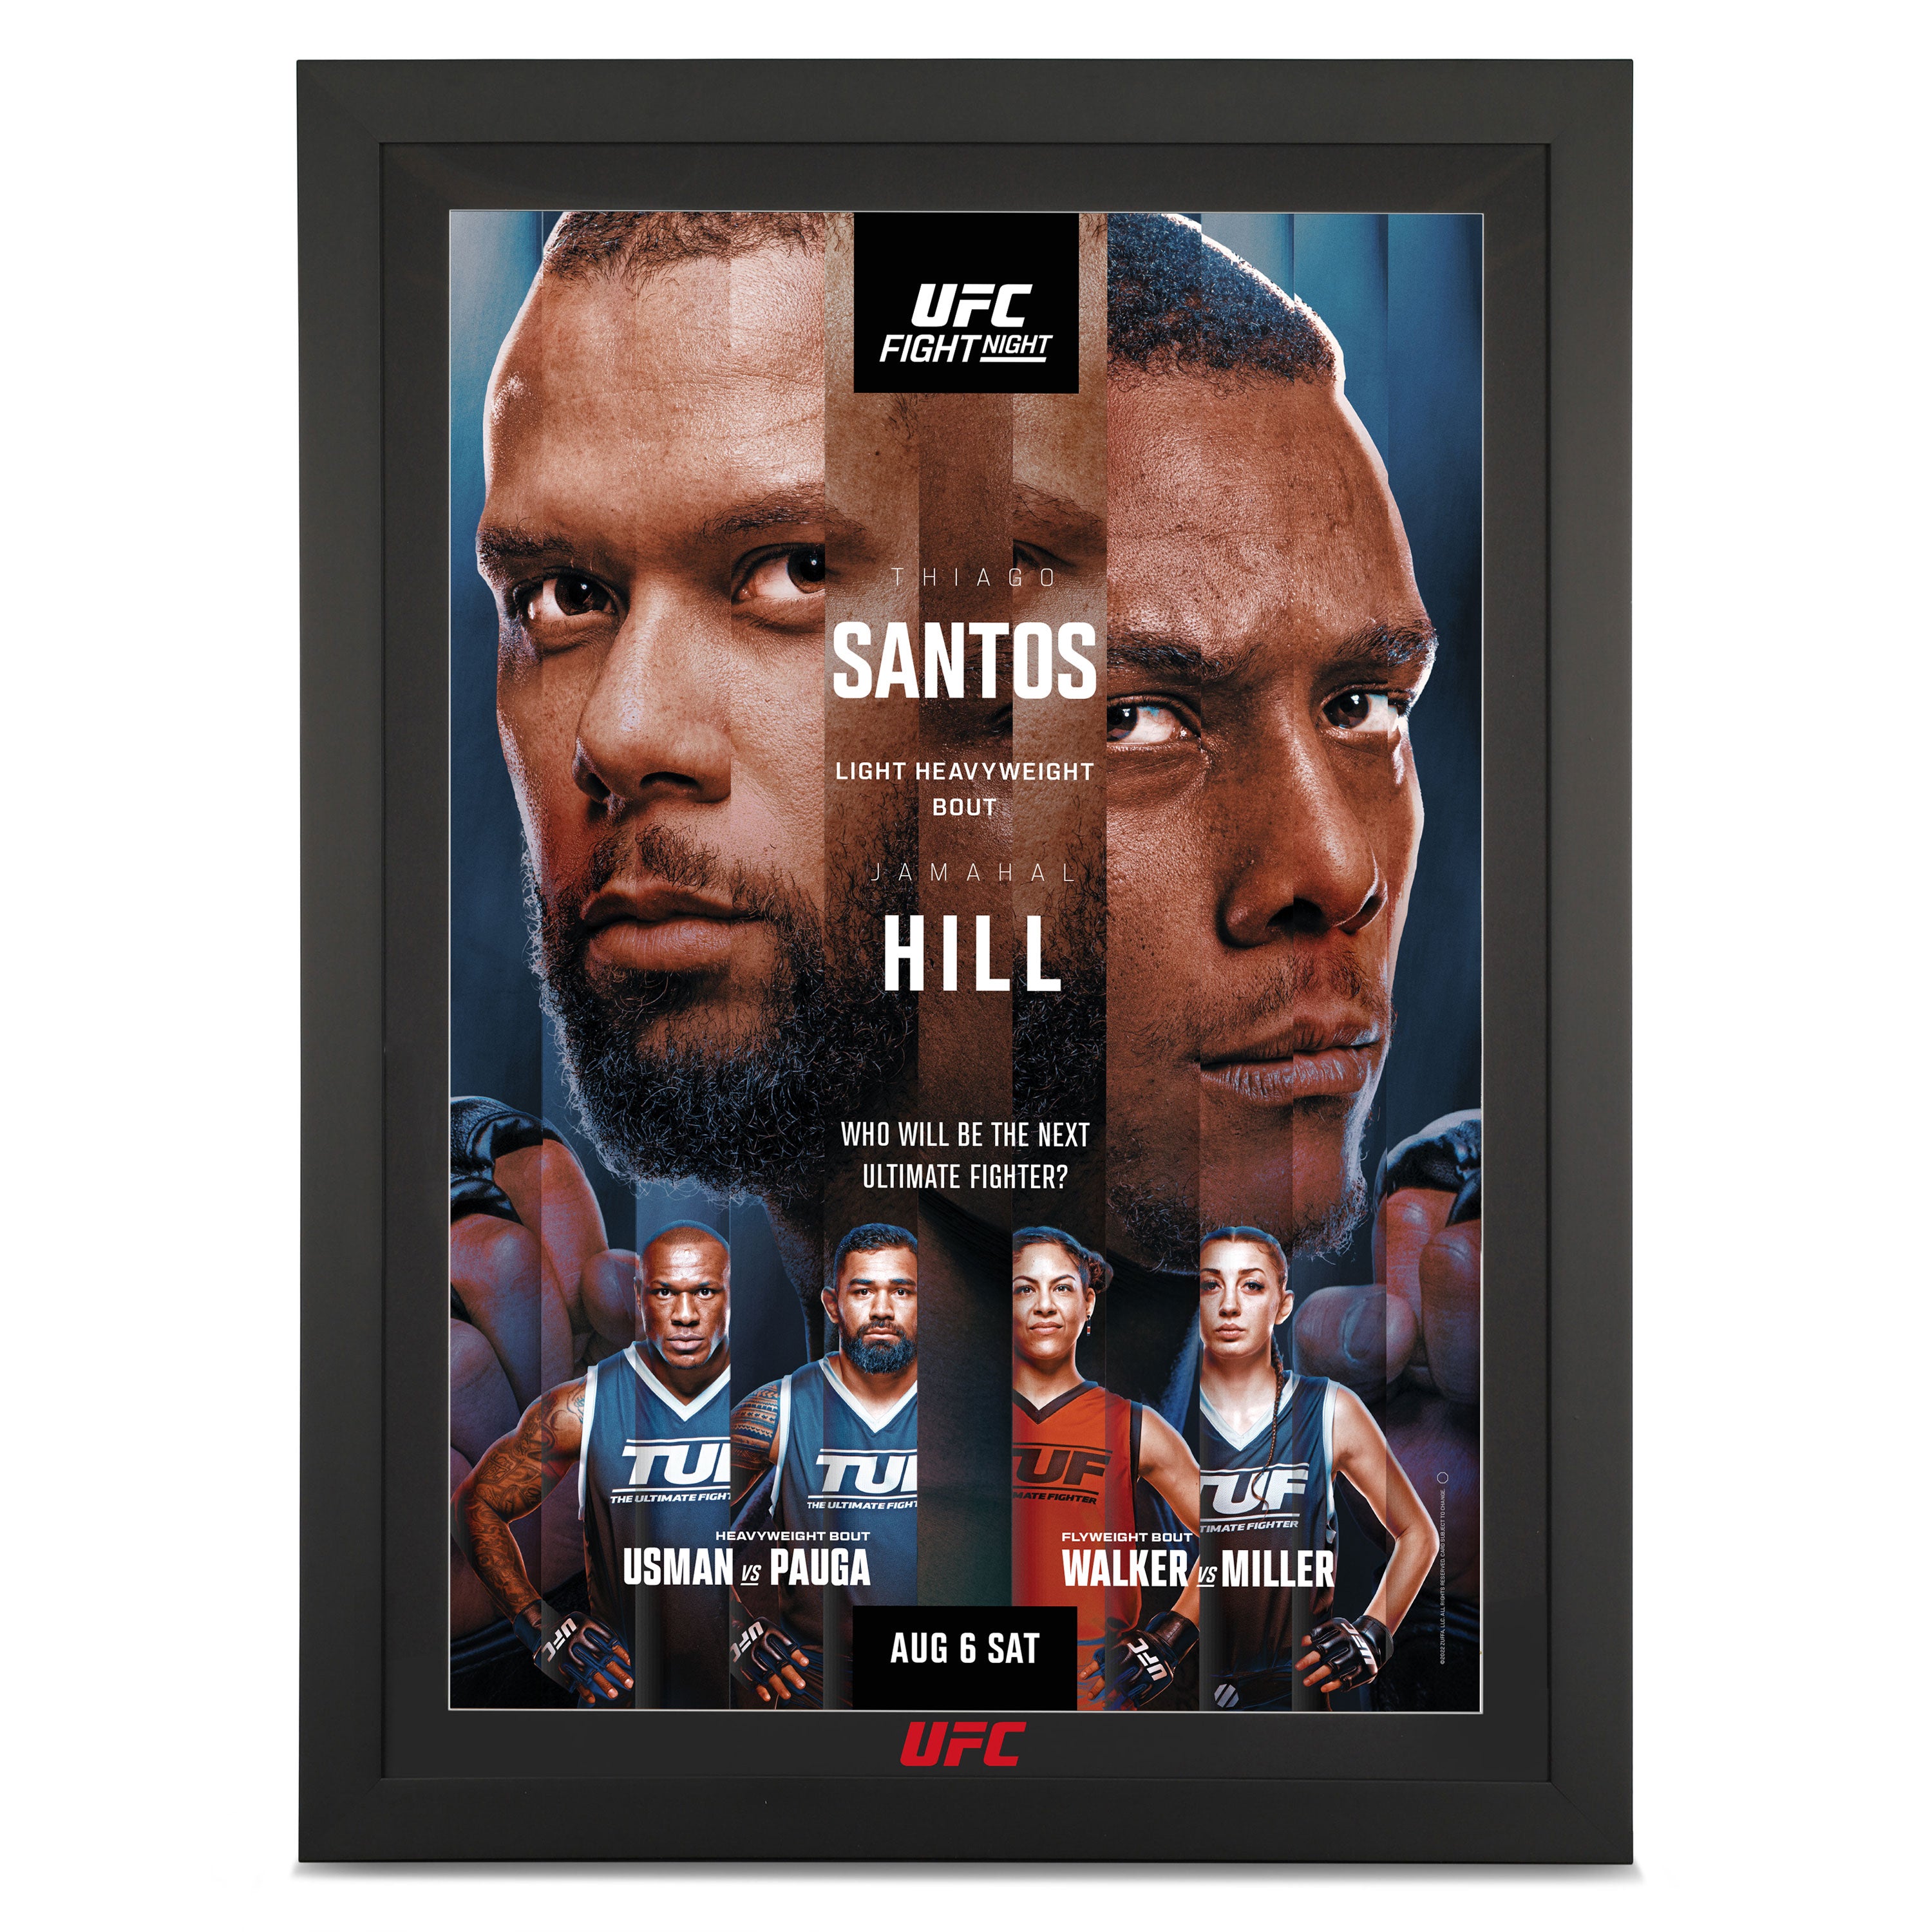 Santos vs Hill signed poster